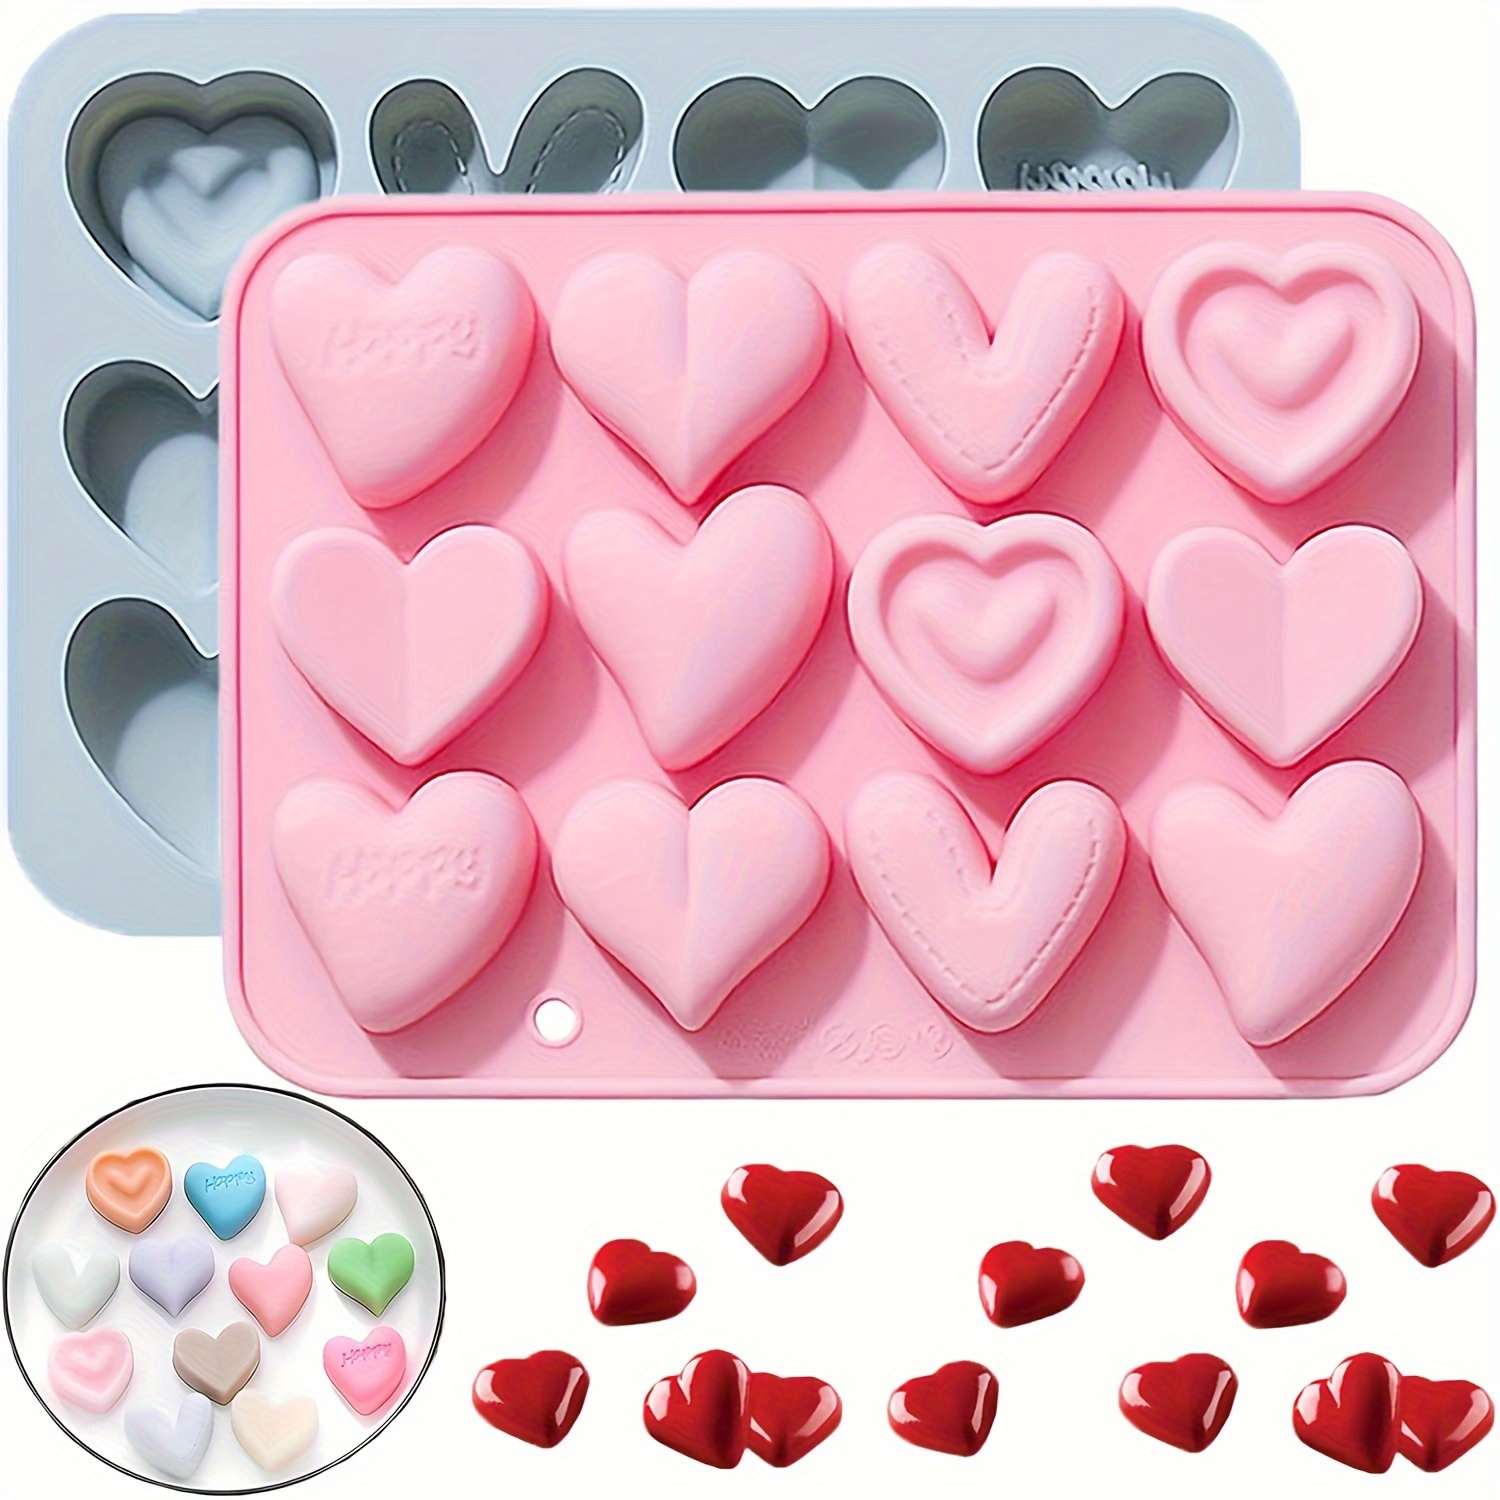 Candy Island Chocolate Mold - Love Heart #606 – Candy Island